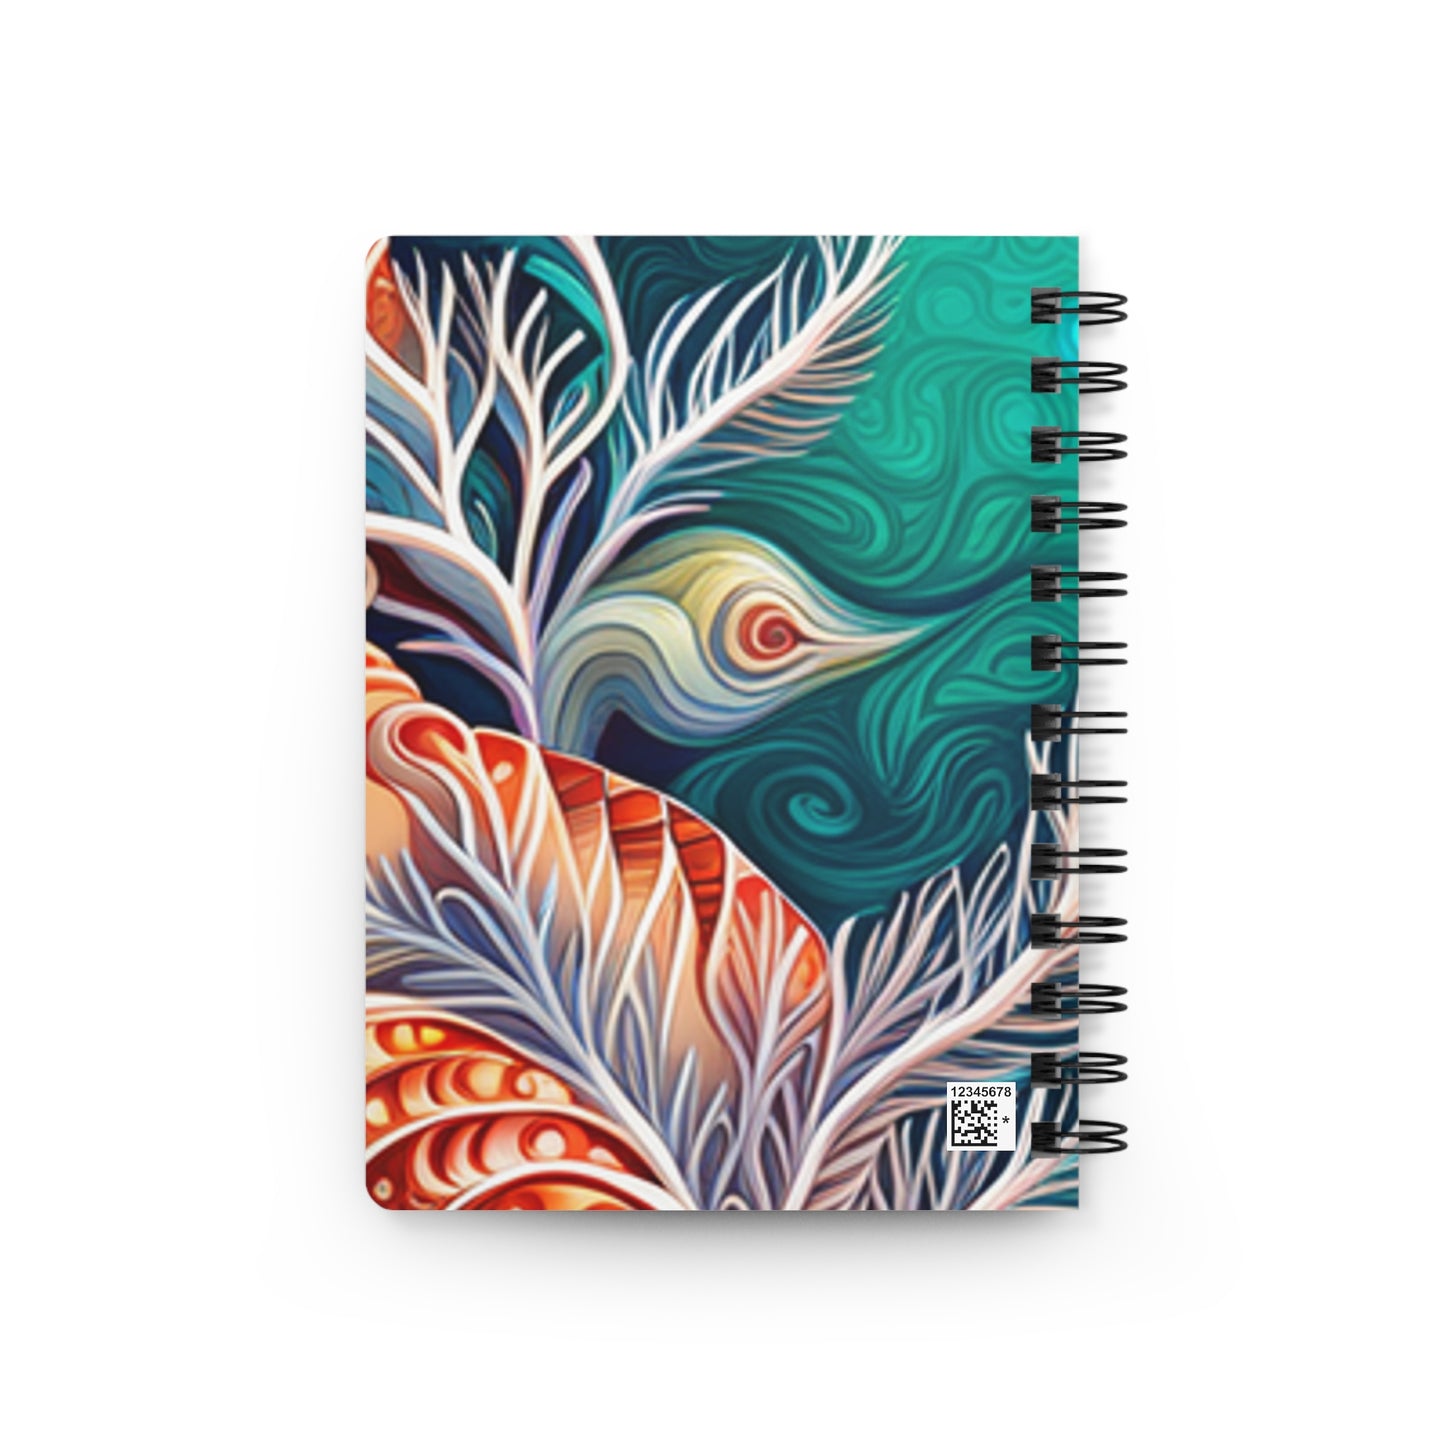 Coral Sea Ocean Coastal Writing Sketch Inspiration Spiral Bound Journal